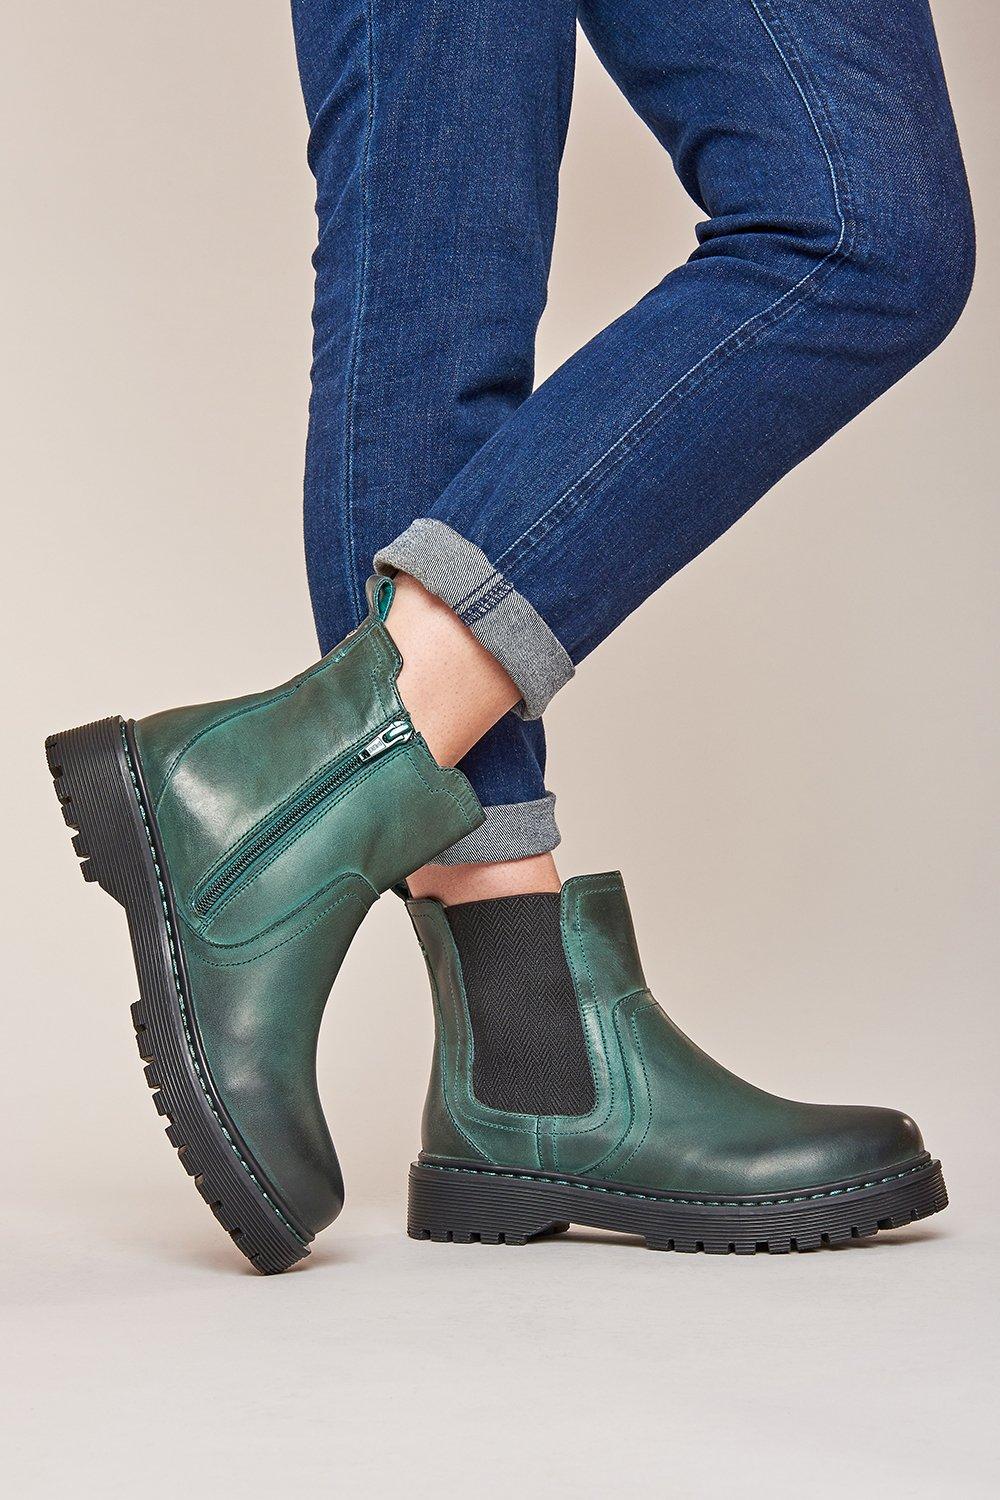 Женские кожаные ботинки челси Abney Moshulu, зеленый ботинки челси коленвал 2 moshulu синий